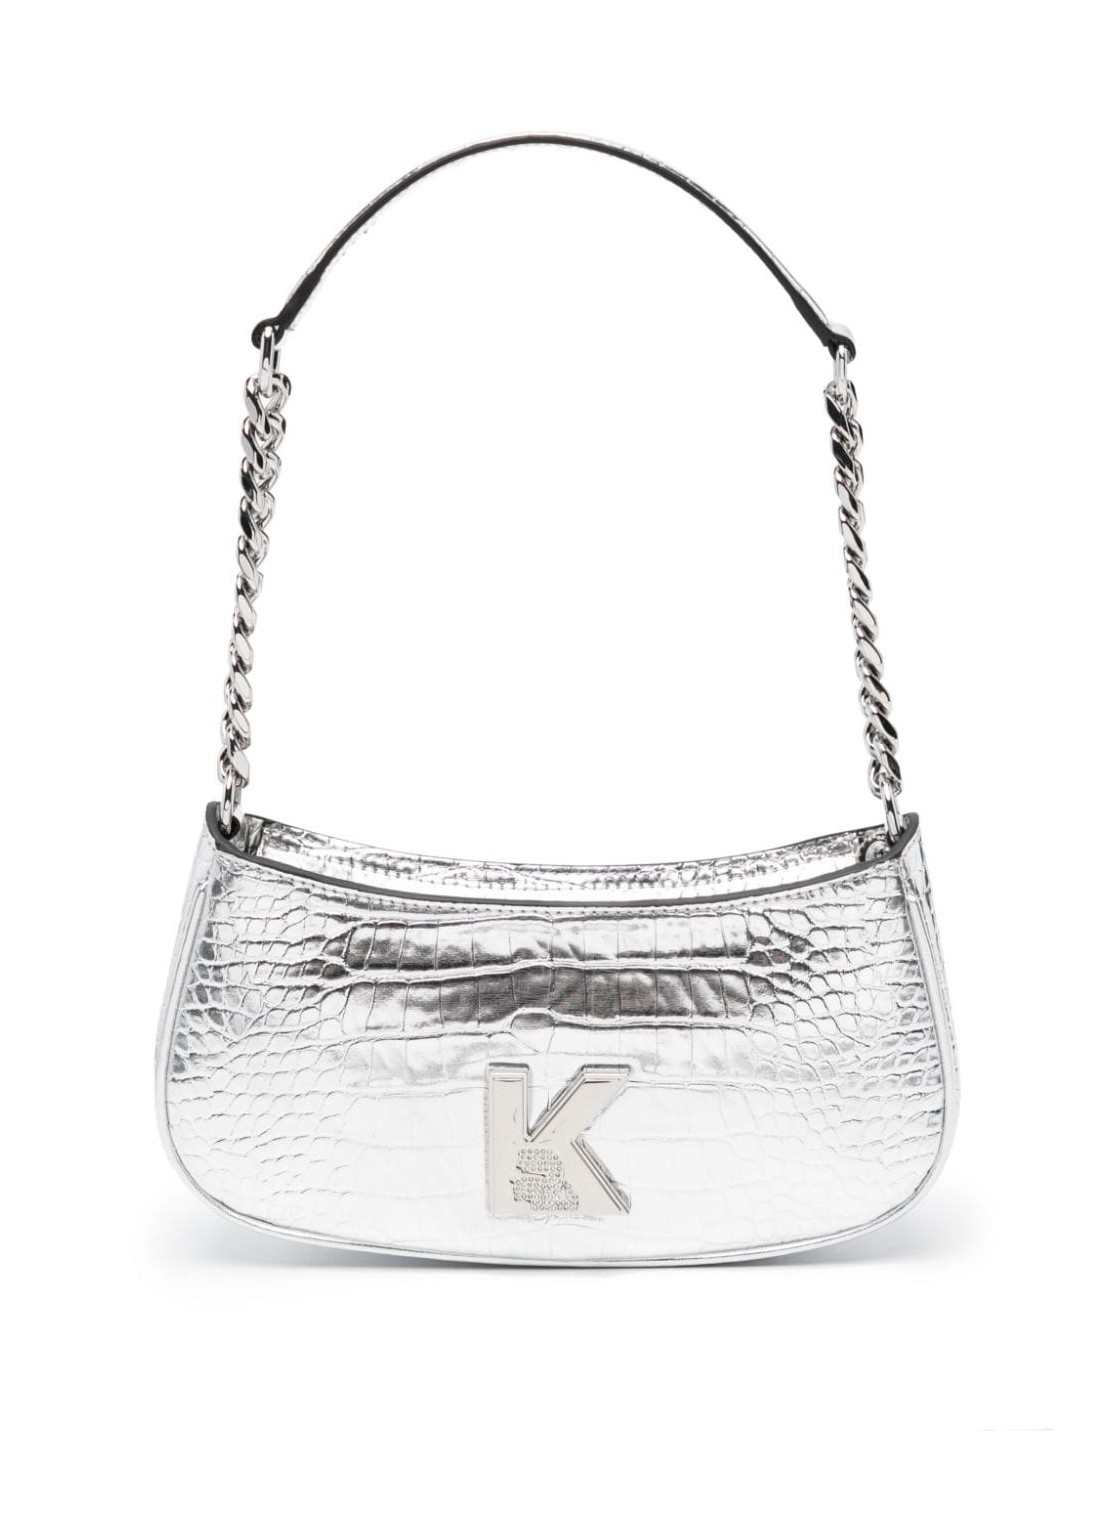 Handbag karl lagerfeld handbag woman k/kameo shoulderbag croc 240w3002 a290 talla plata
 